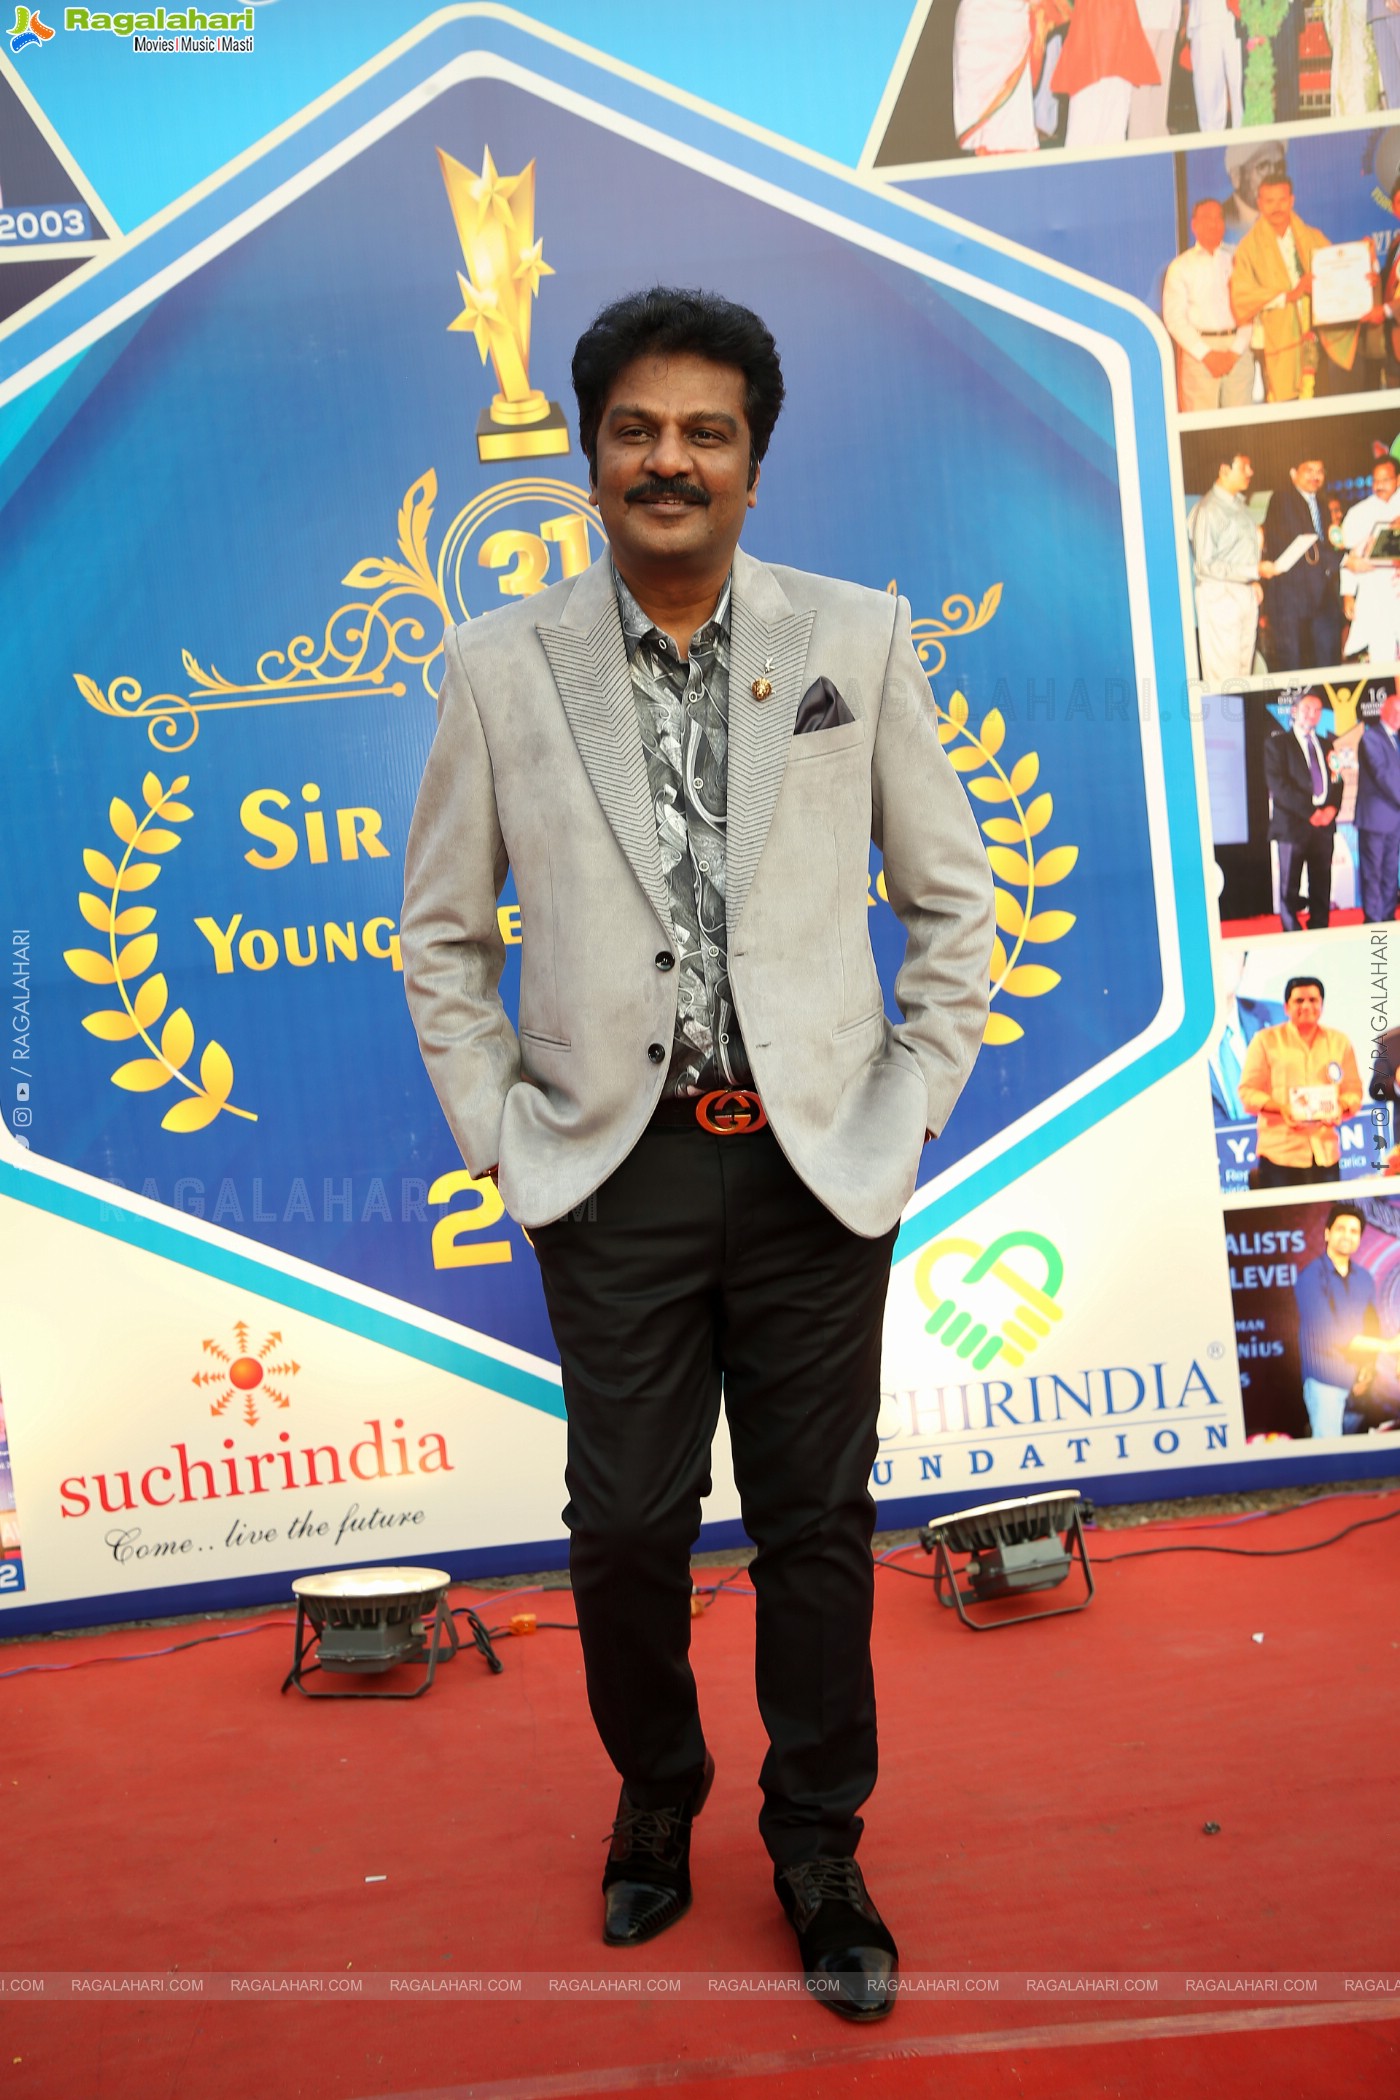 Suchir India Foundation 31st Sir C.V.Raman Young Genius Awards Event